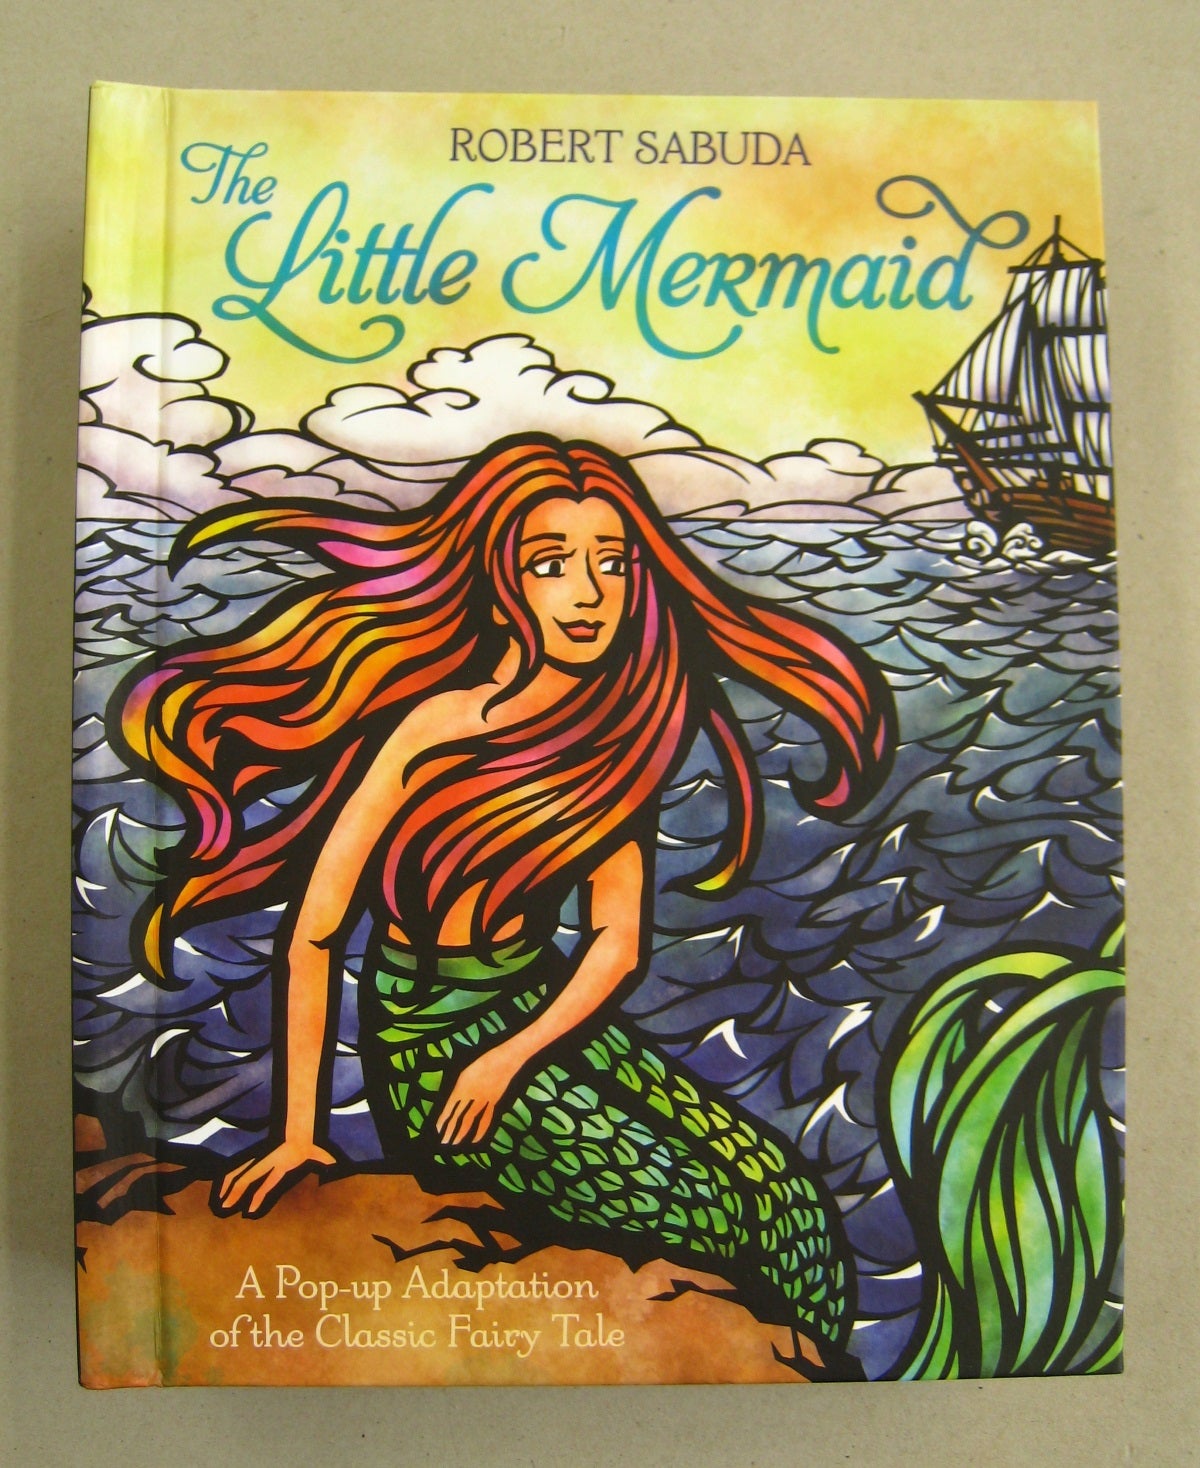 hans christian andersen the little mermaid cover